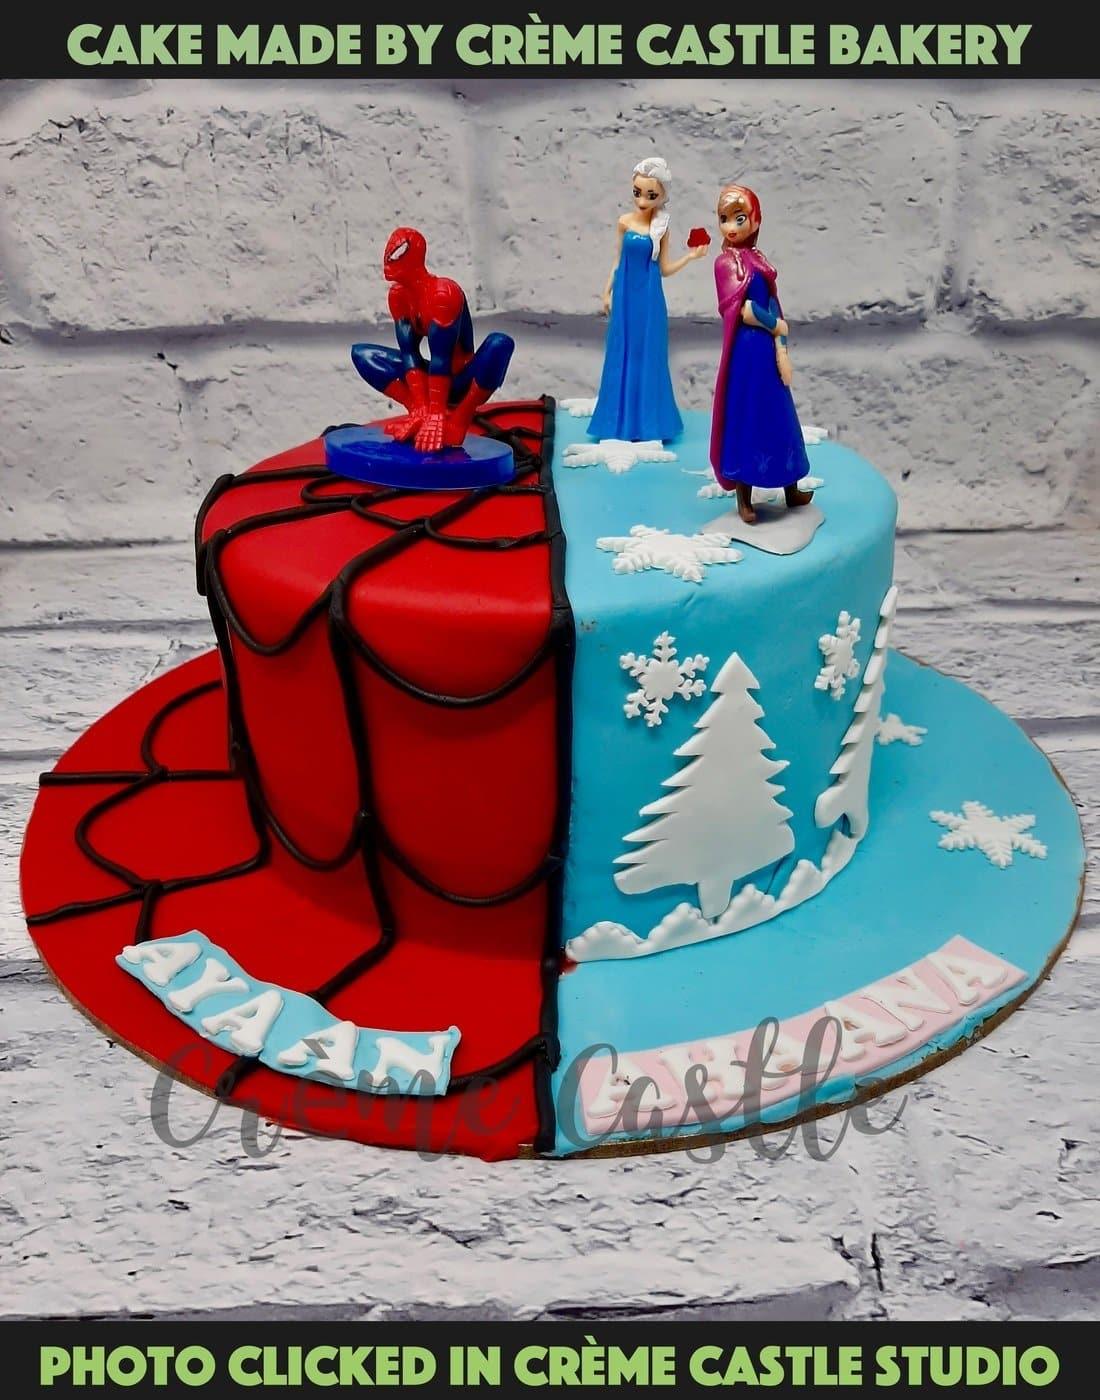 1st Birthday Cakes - Quality Cake Company Tamworth